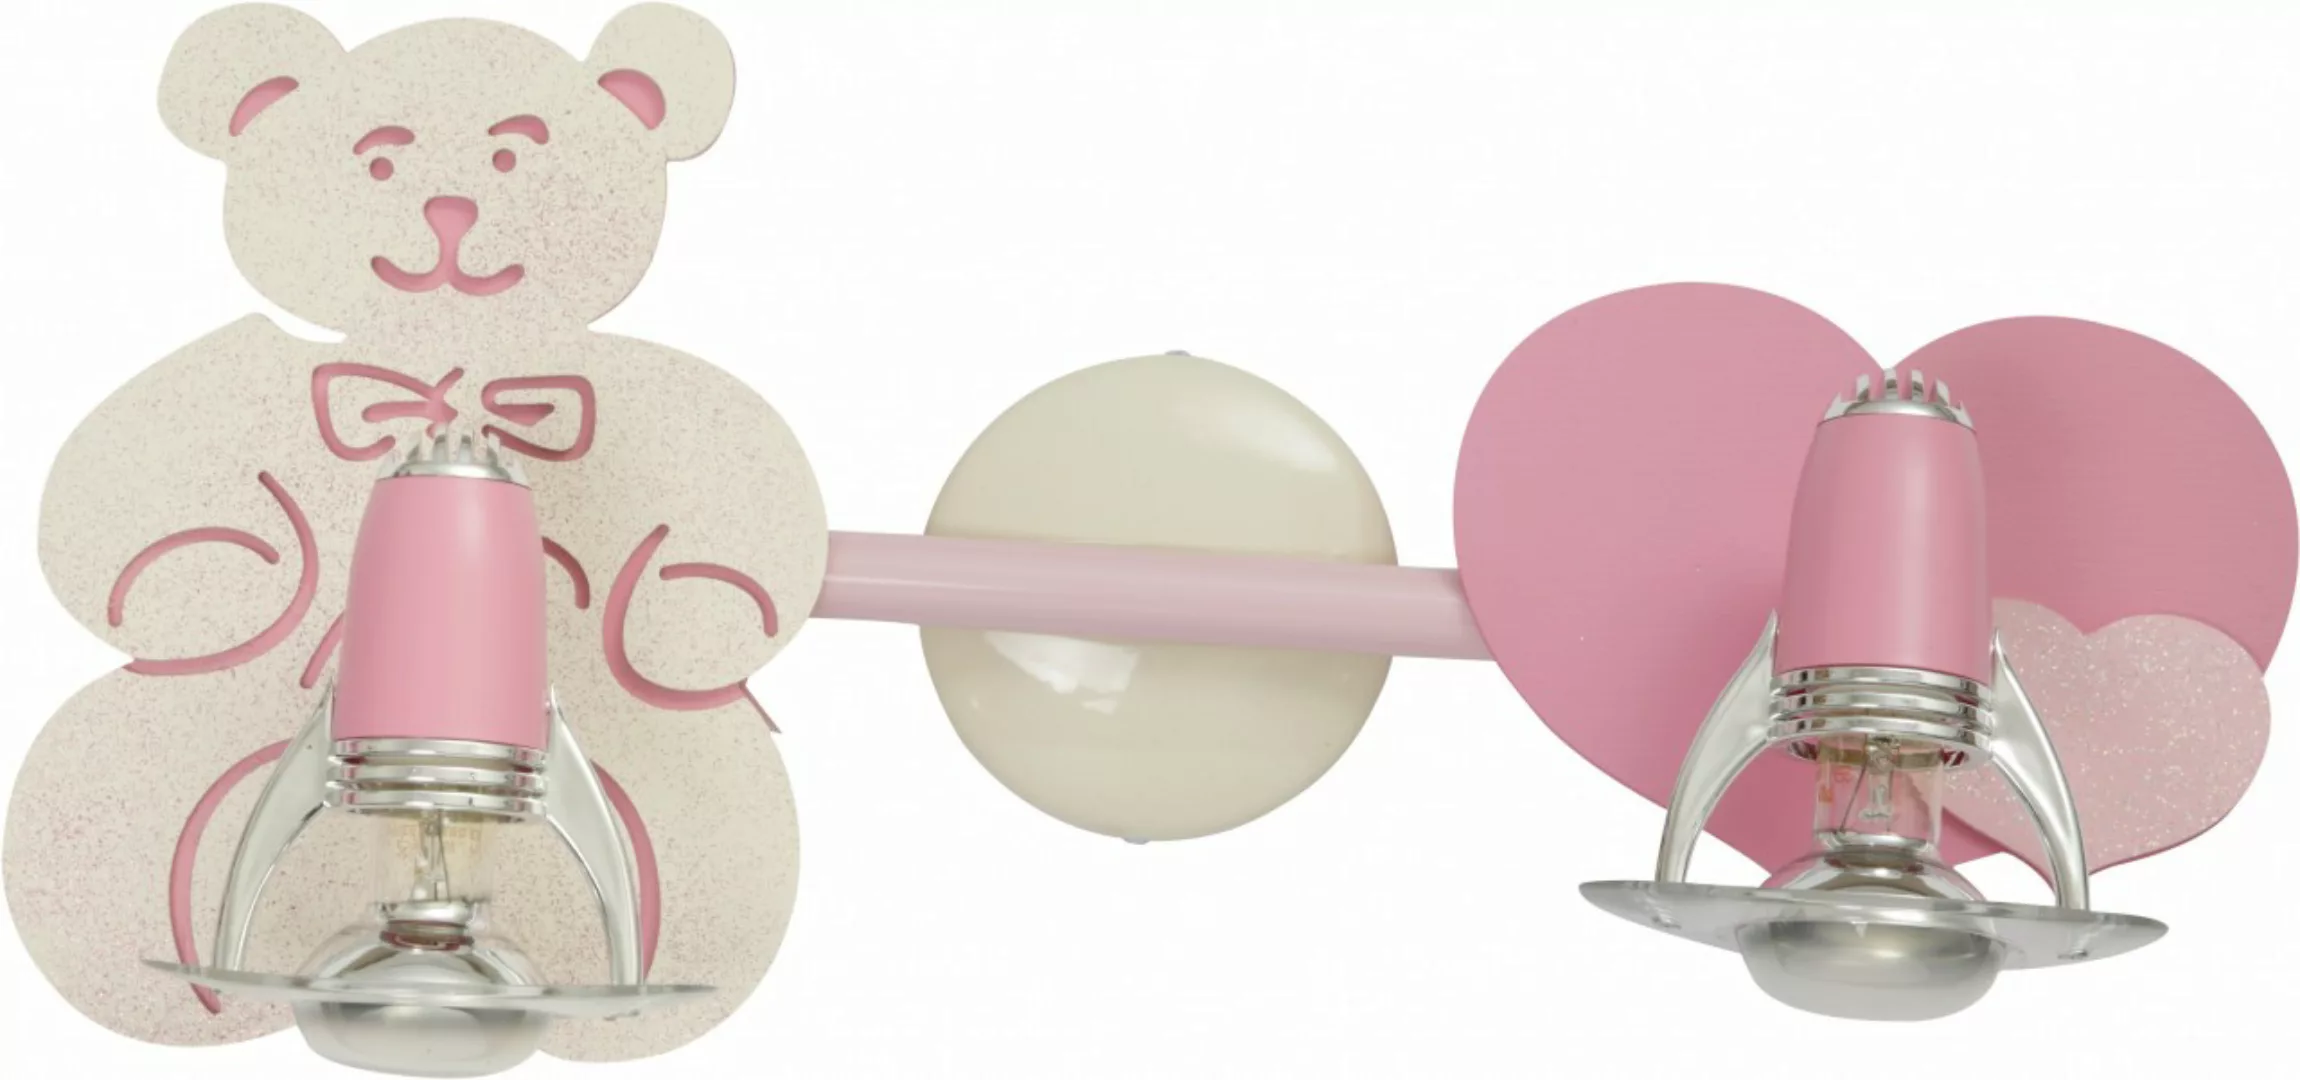 Kinderzimmerlampe Rosa mit Teddybär Design 2-flammig günstig online kaufen